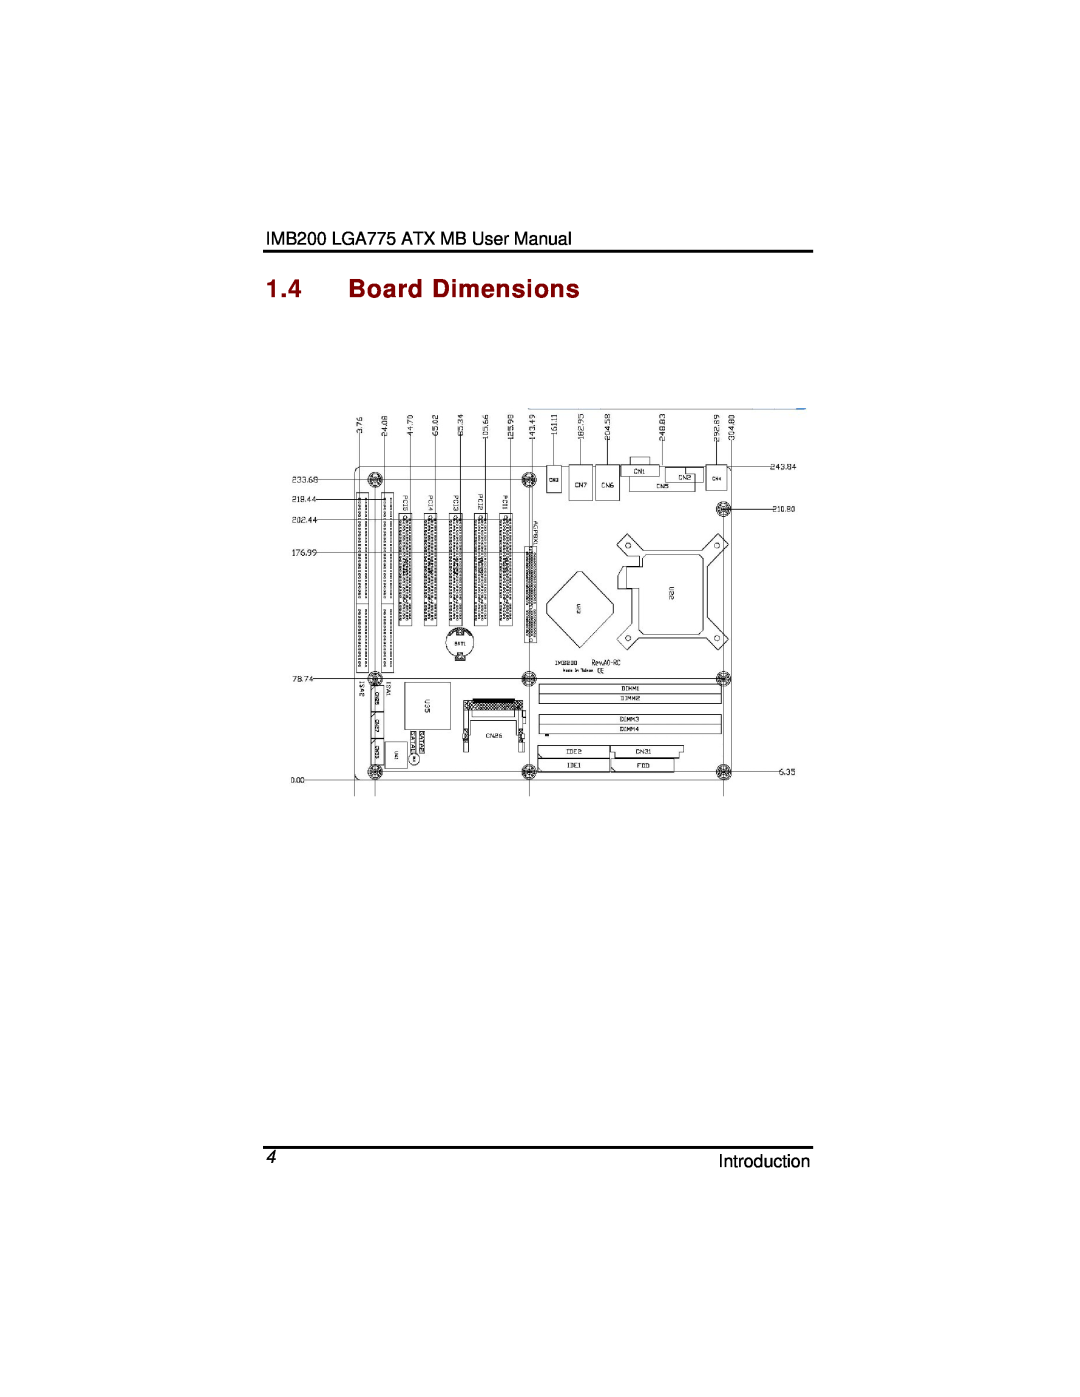 Intel IMB200VGE user manual Board Dimensions, Introduction 